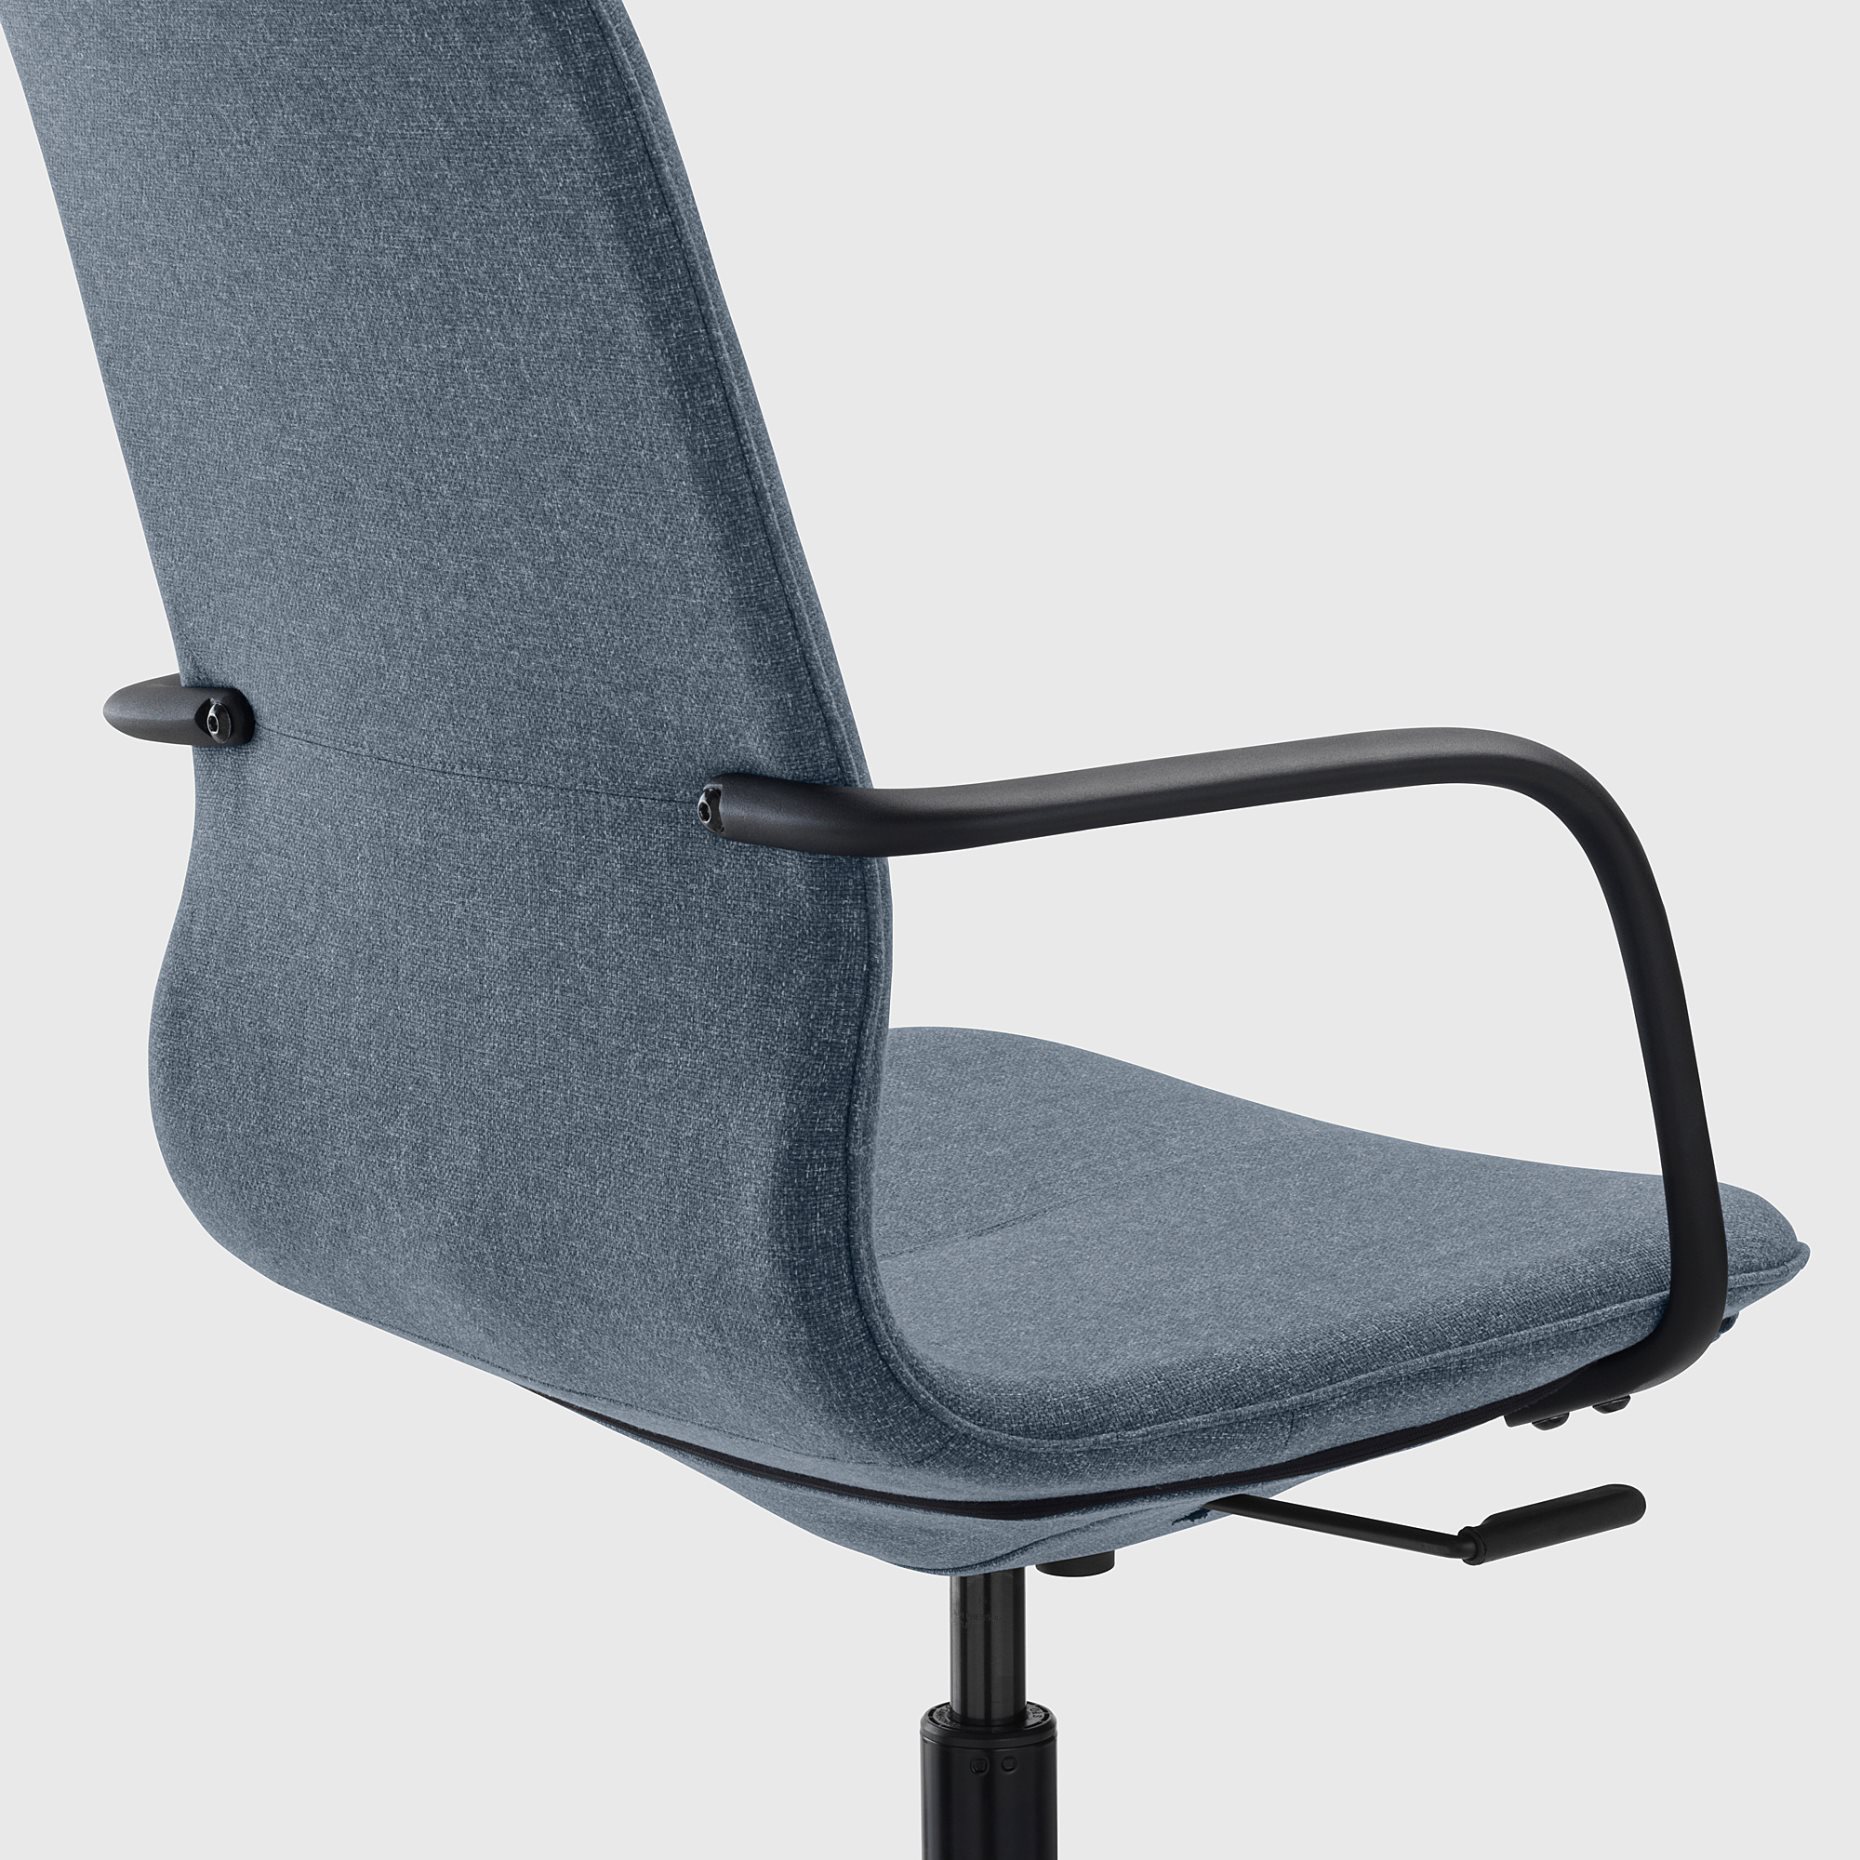 LÅNGFJÄLL, swivel chair, 691.763.65